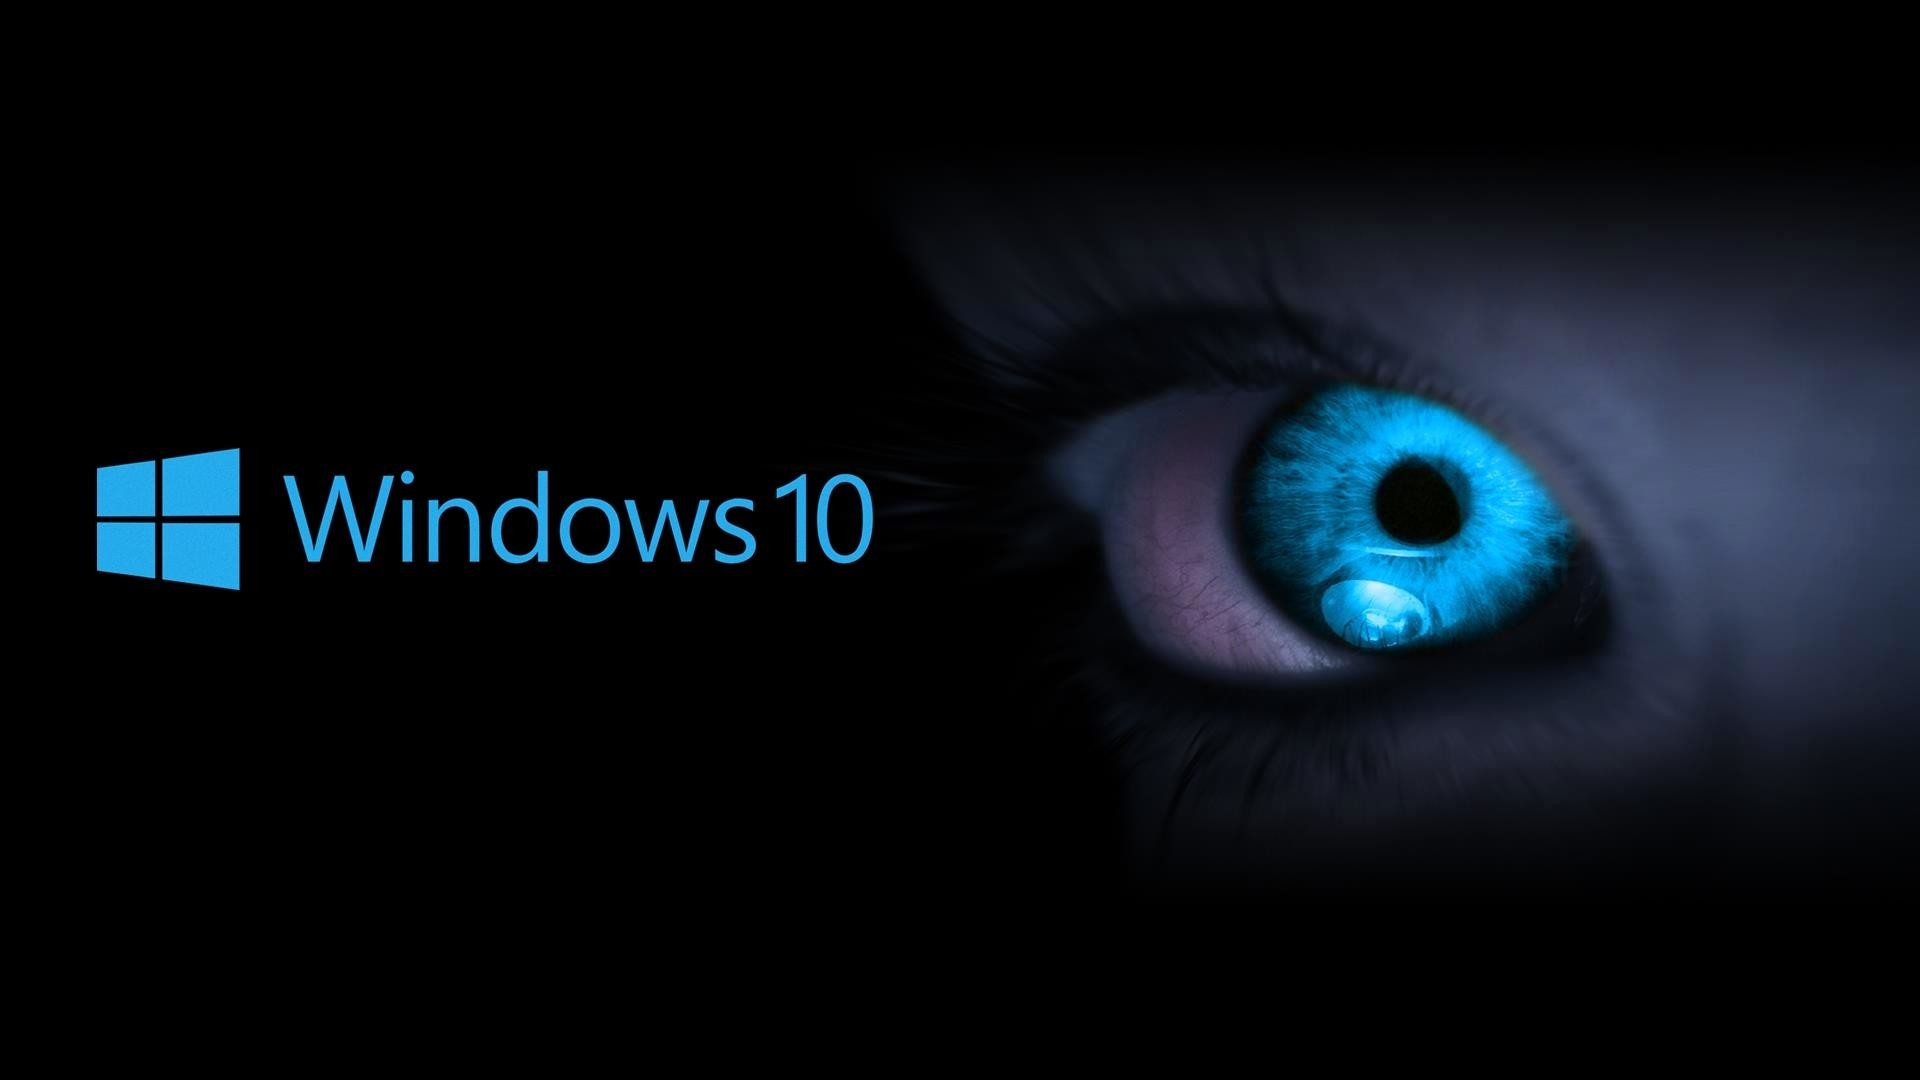 Cortana Animated Wallpaper Windows 10 71 Images